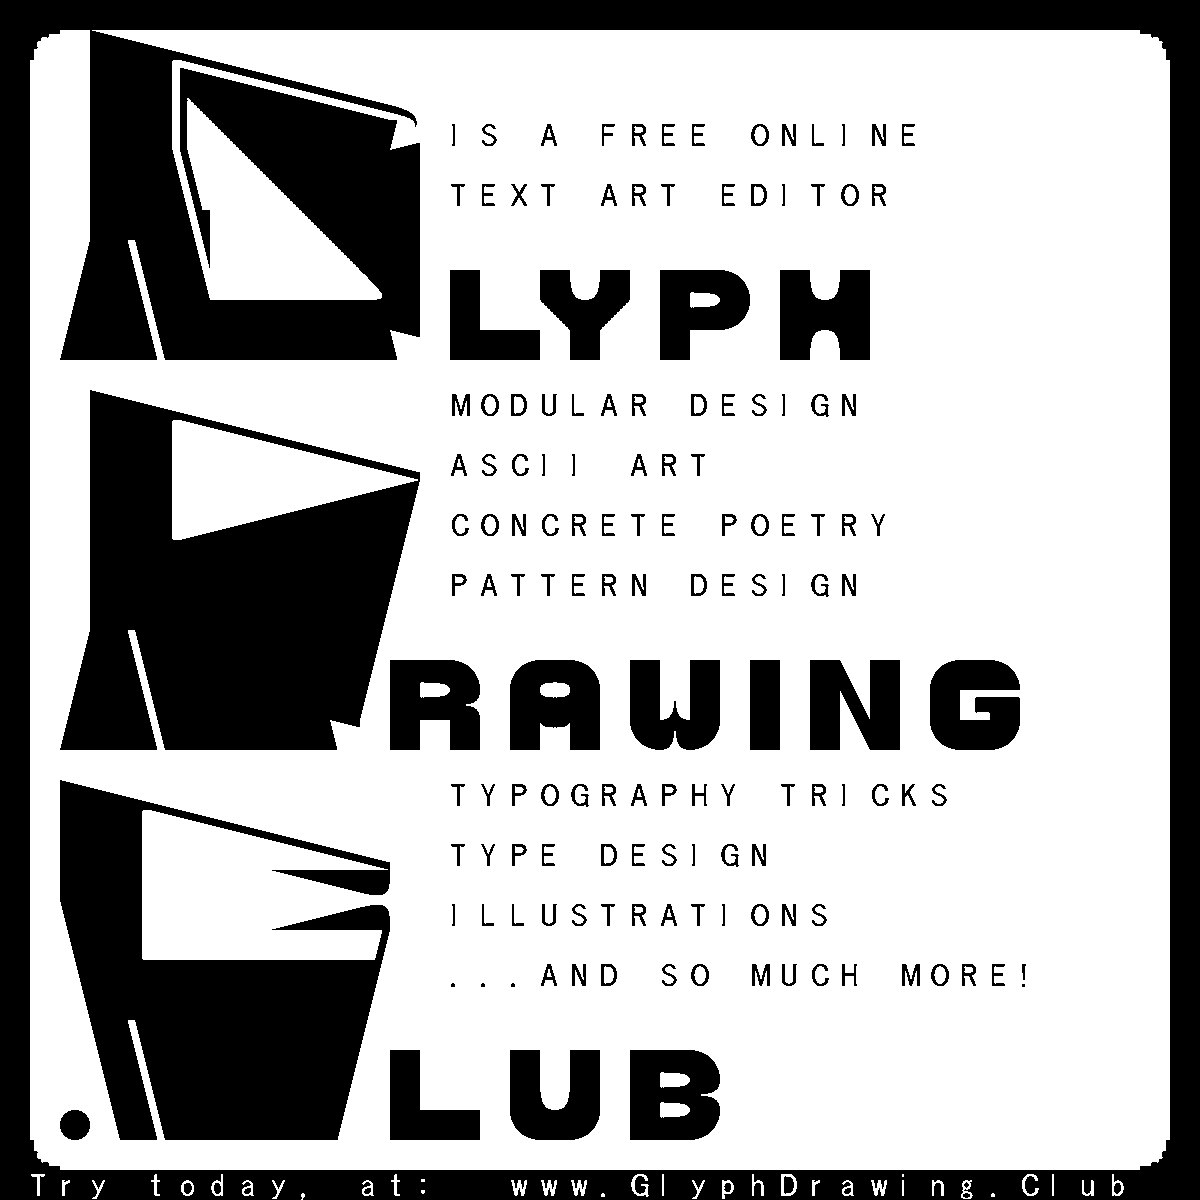 Glyph Drawing Club advertisement